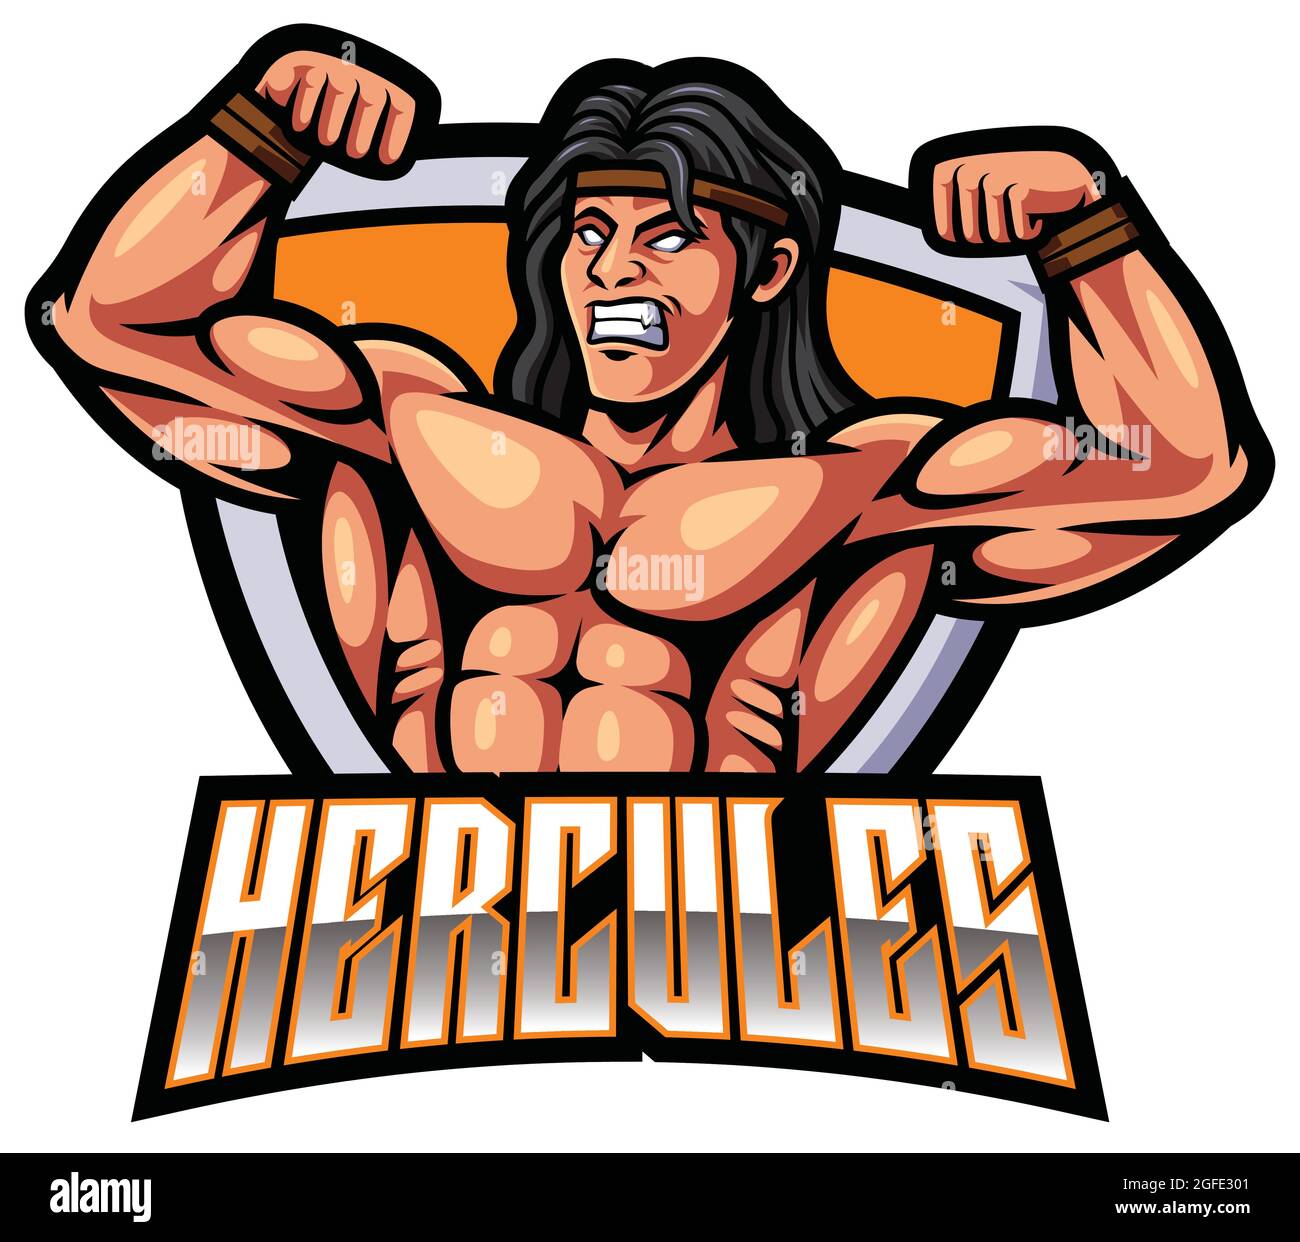 Hercule esport gaming Mascot logo vector Stock Vector